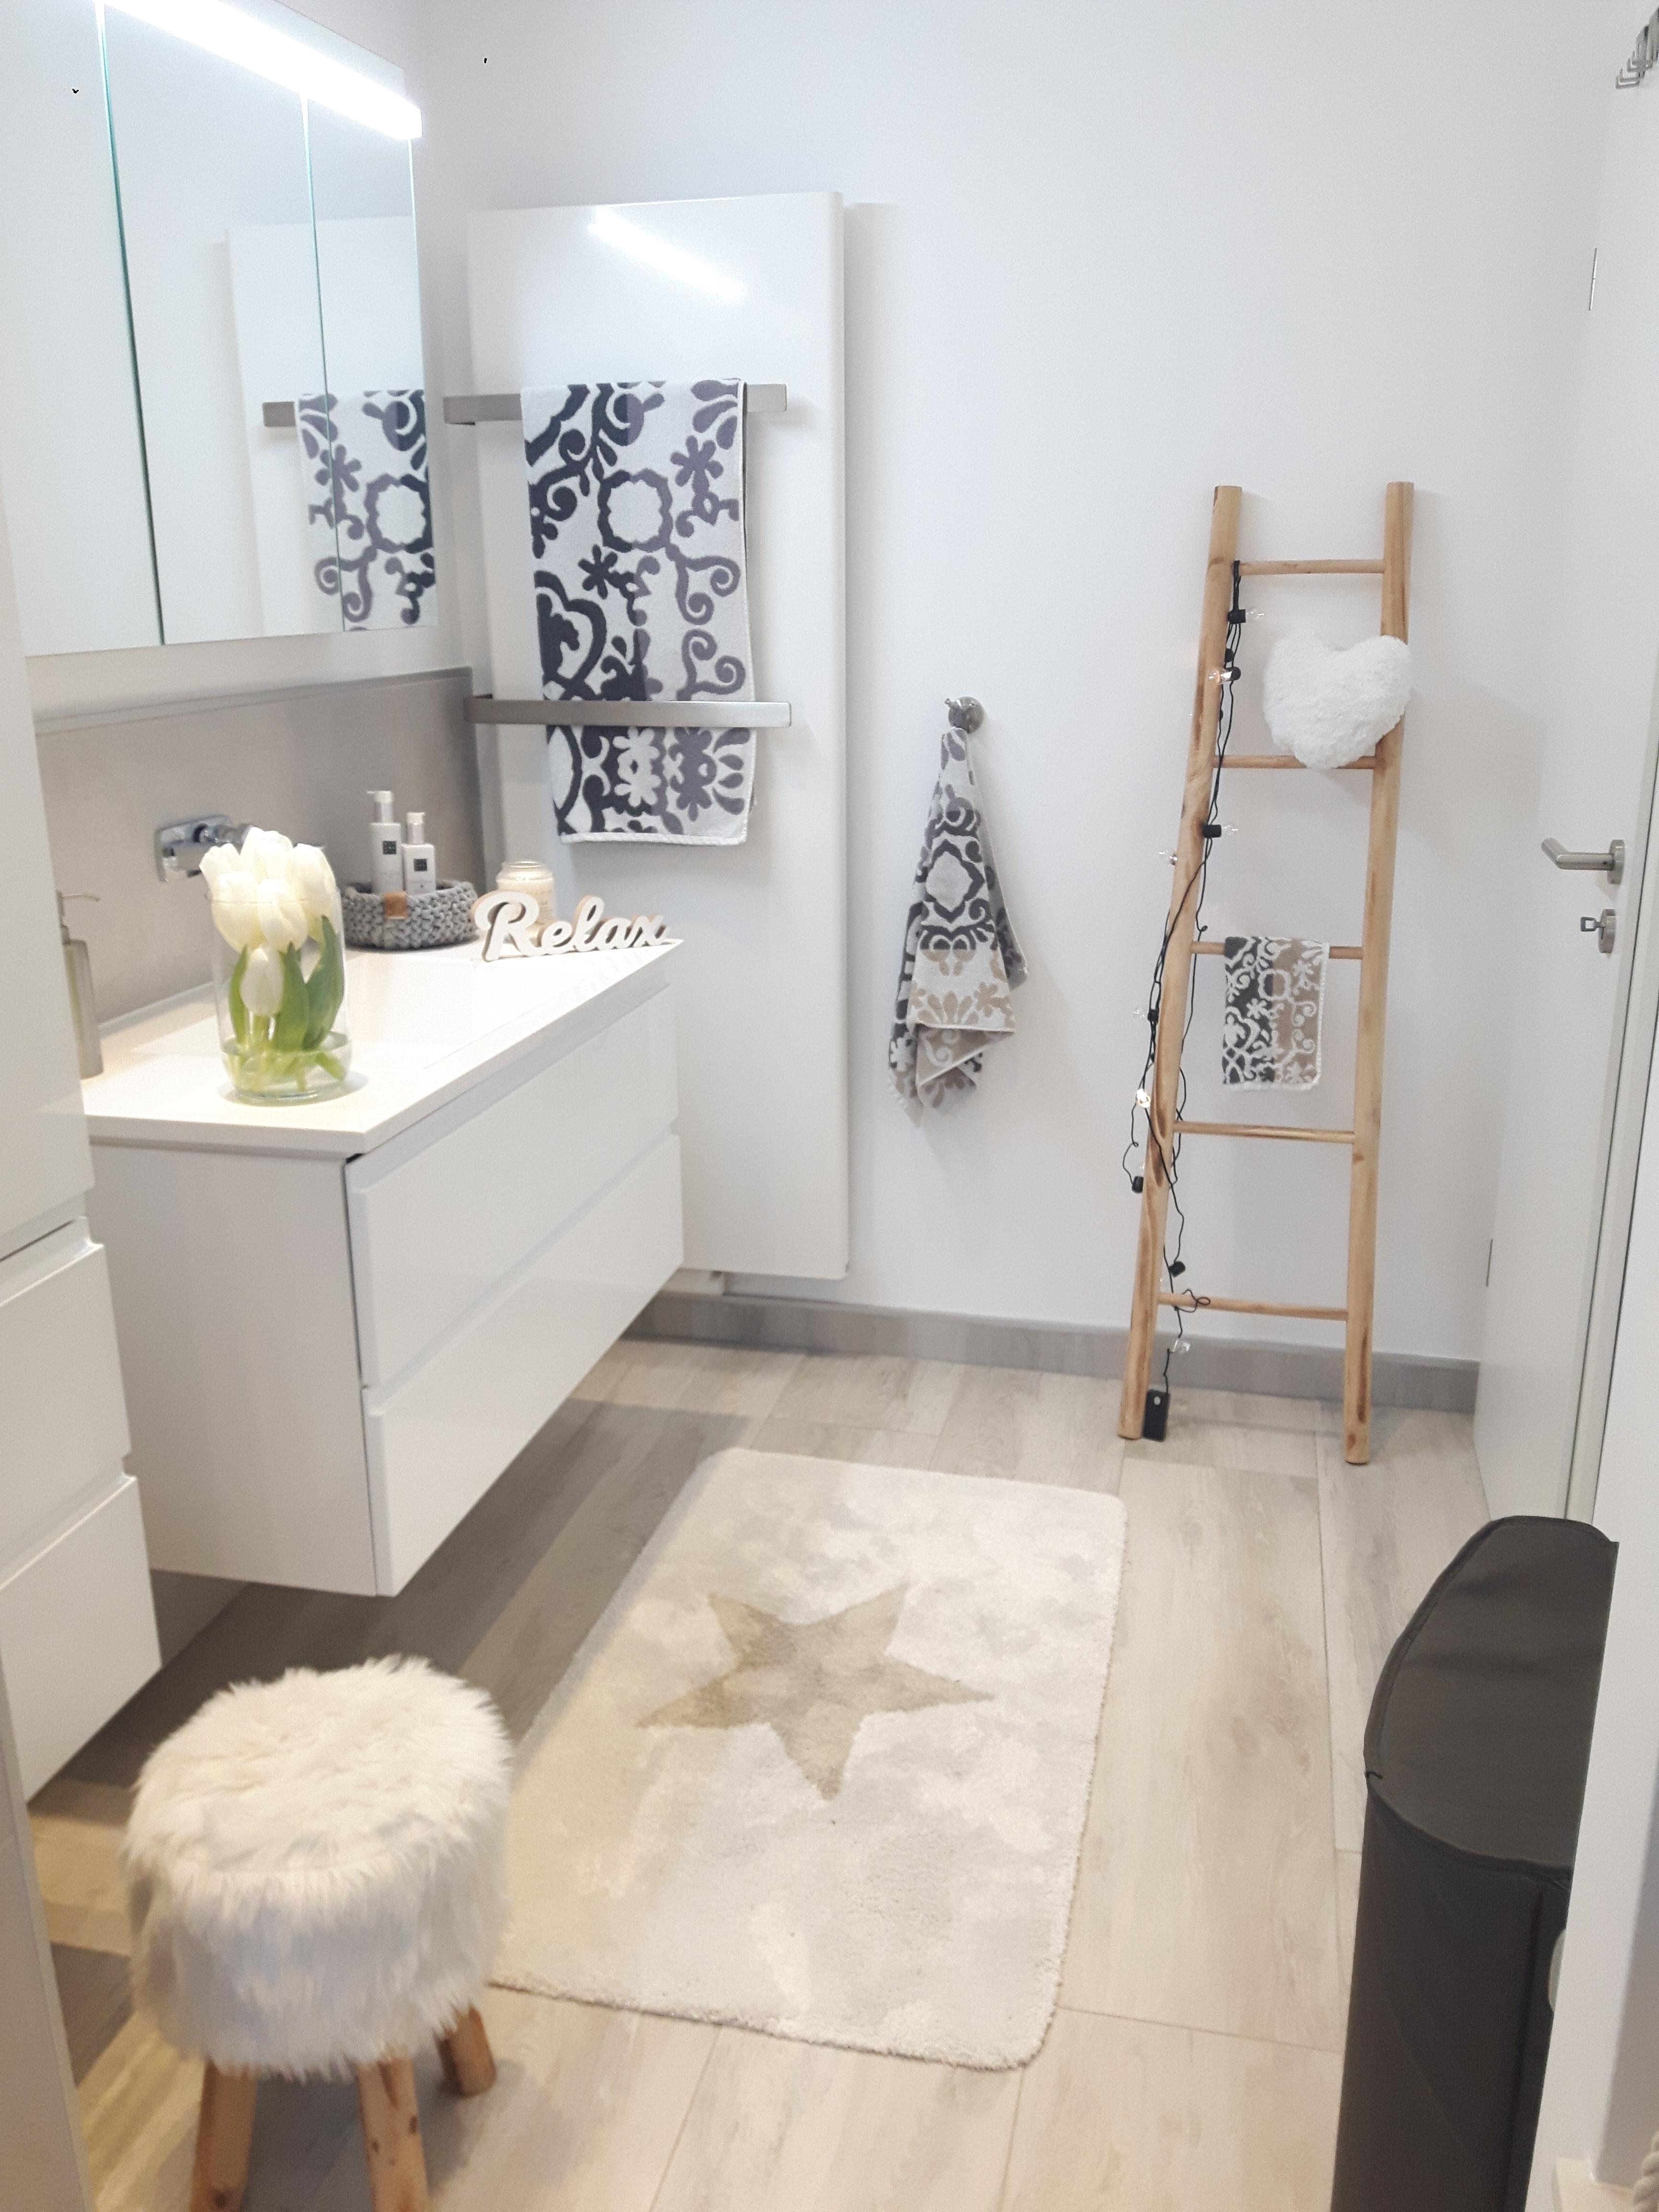 Unser Badezimmer in Erdtönen mit grau
#whiteling #scandiliving #mynordicroom